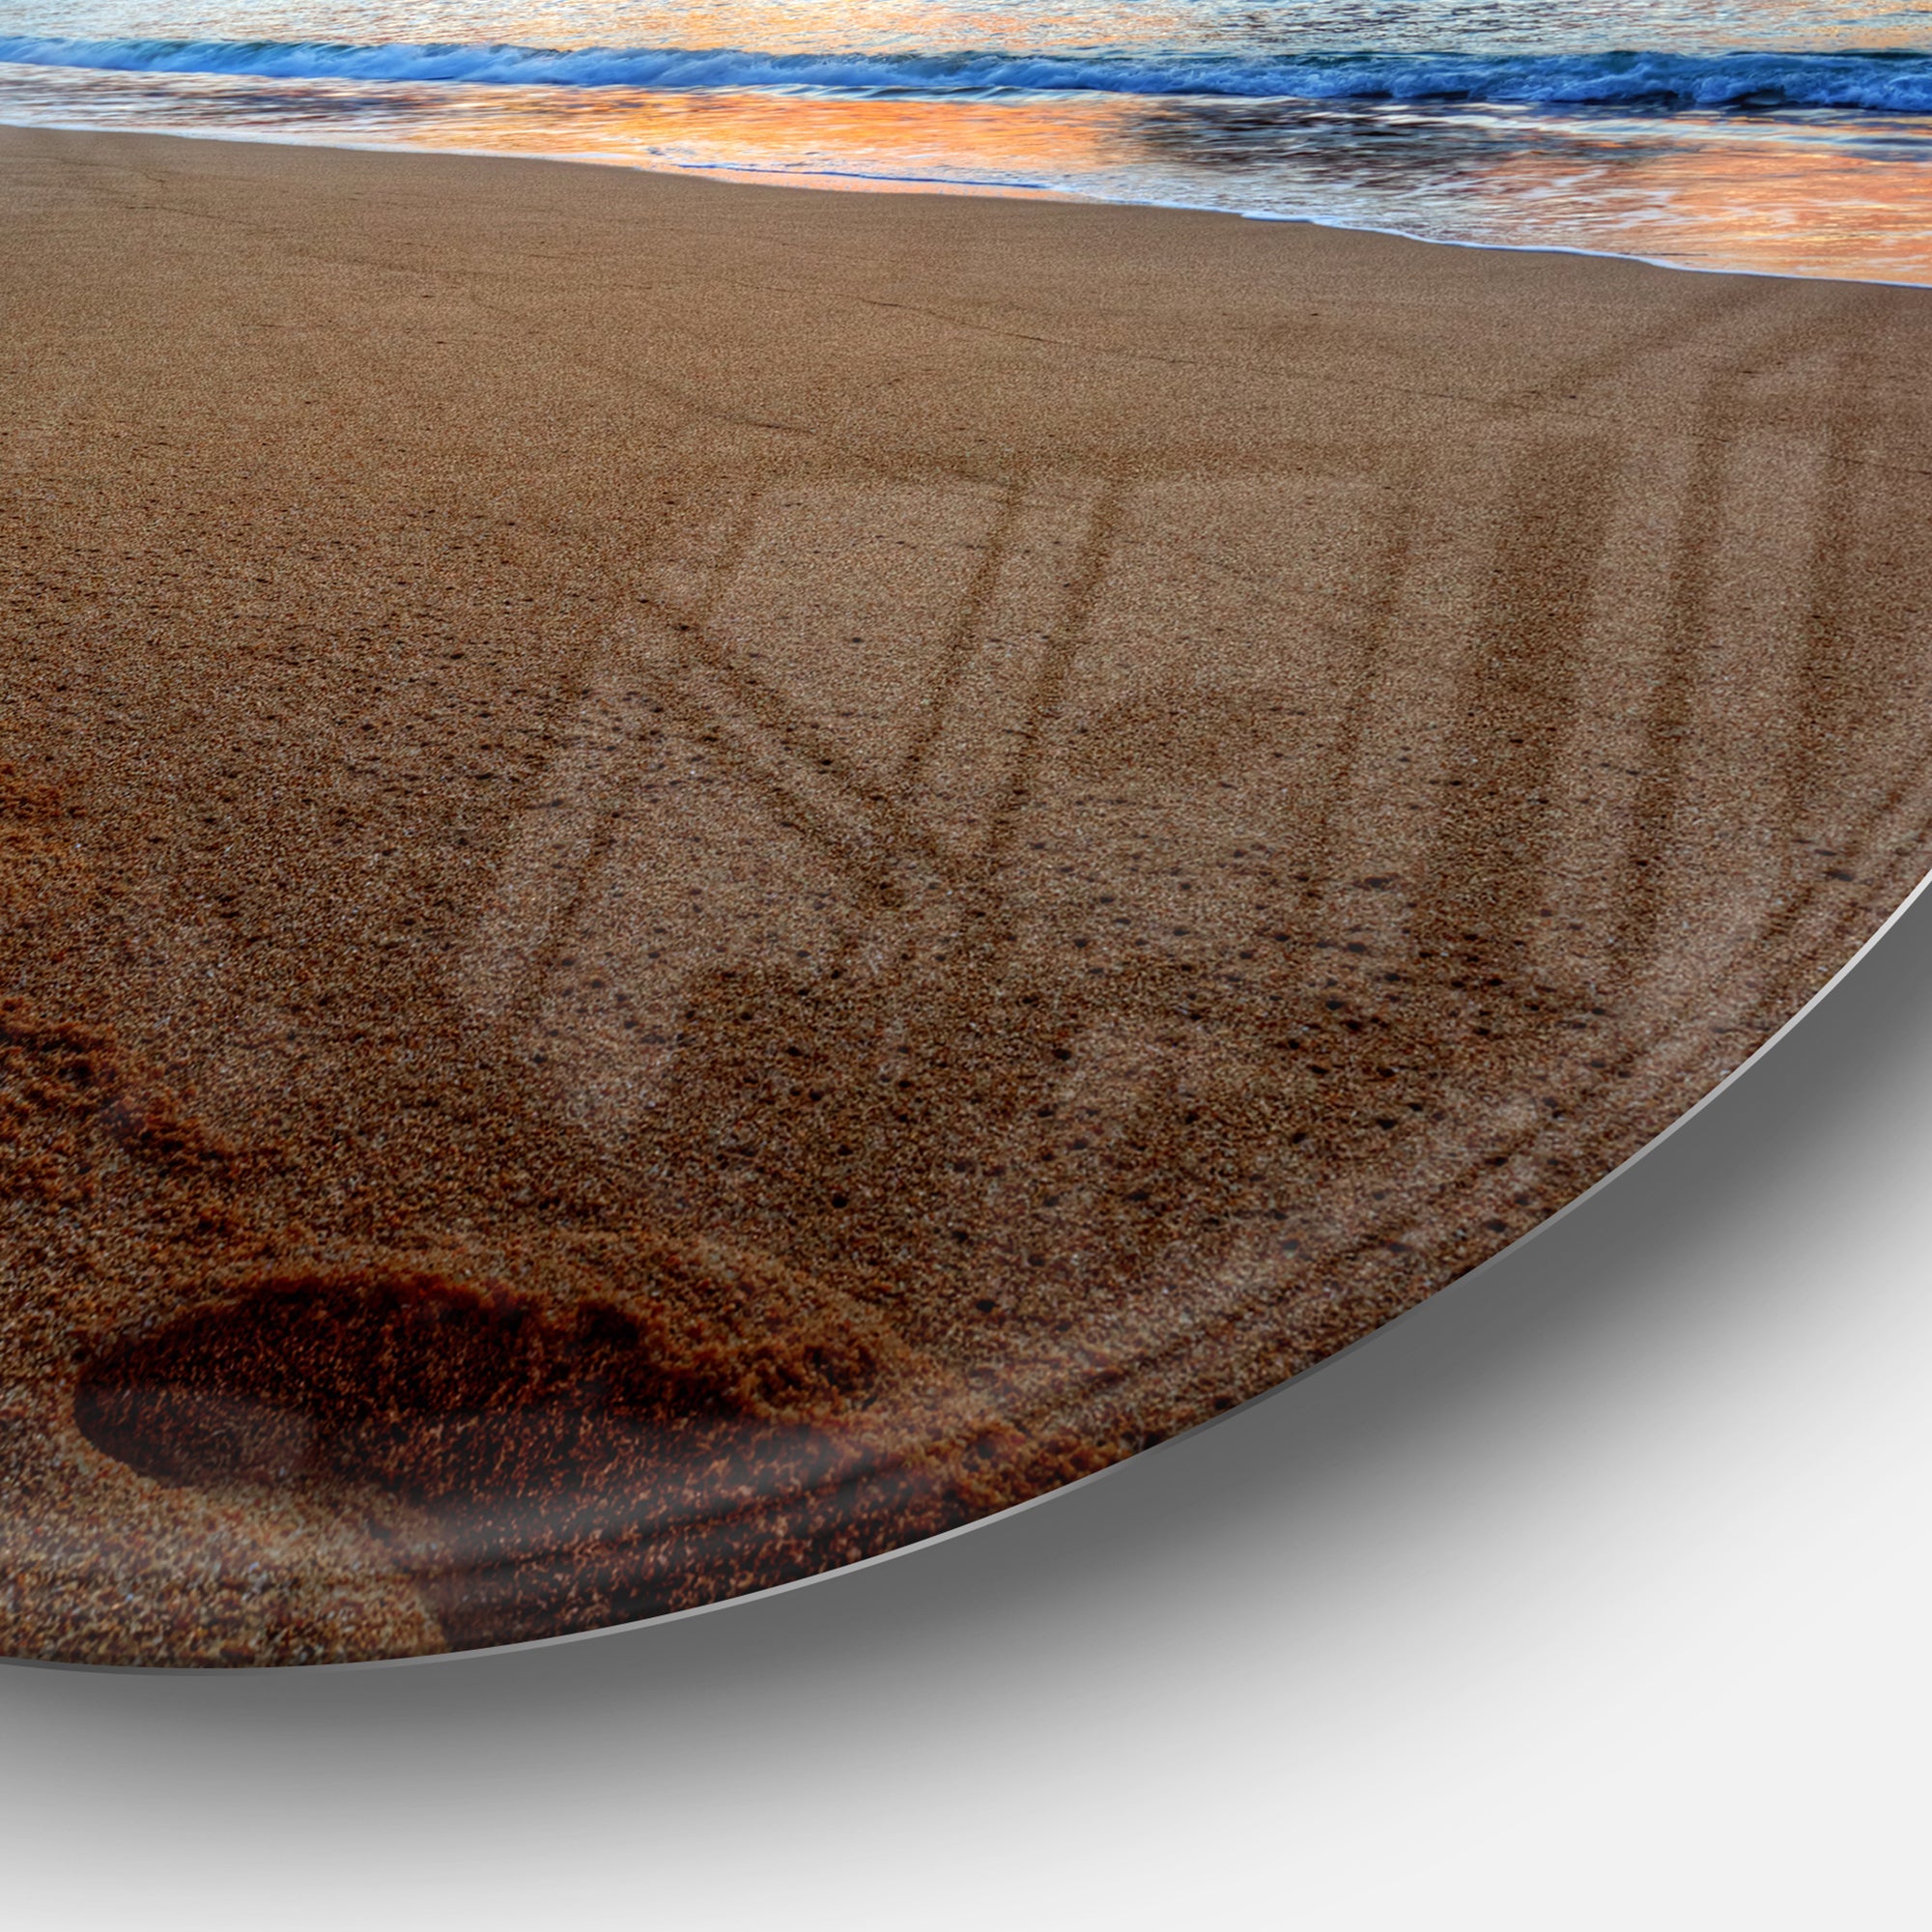 Trodden Sand on Ocean Beach Seashore Photo Metal Circle Wall Art